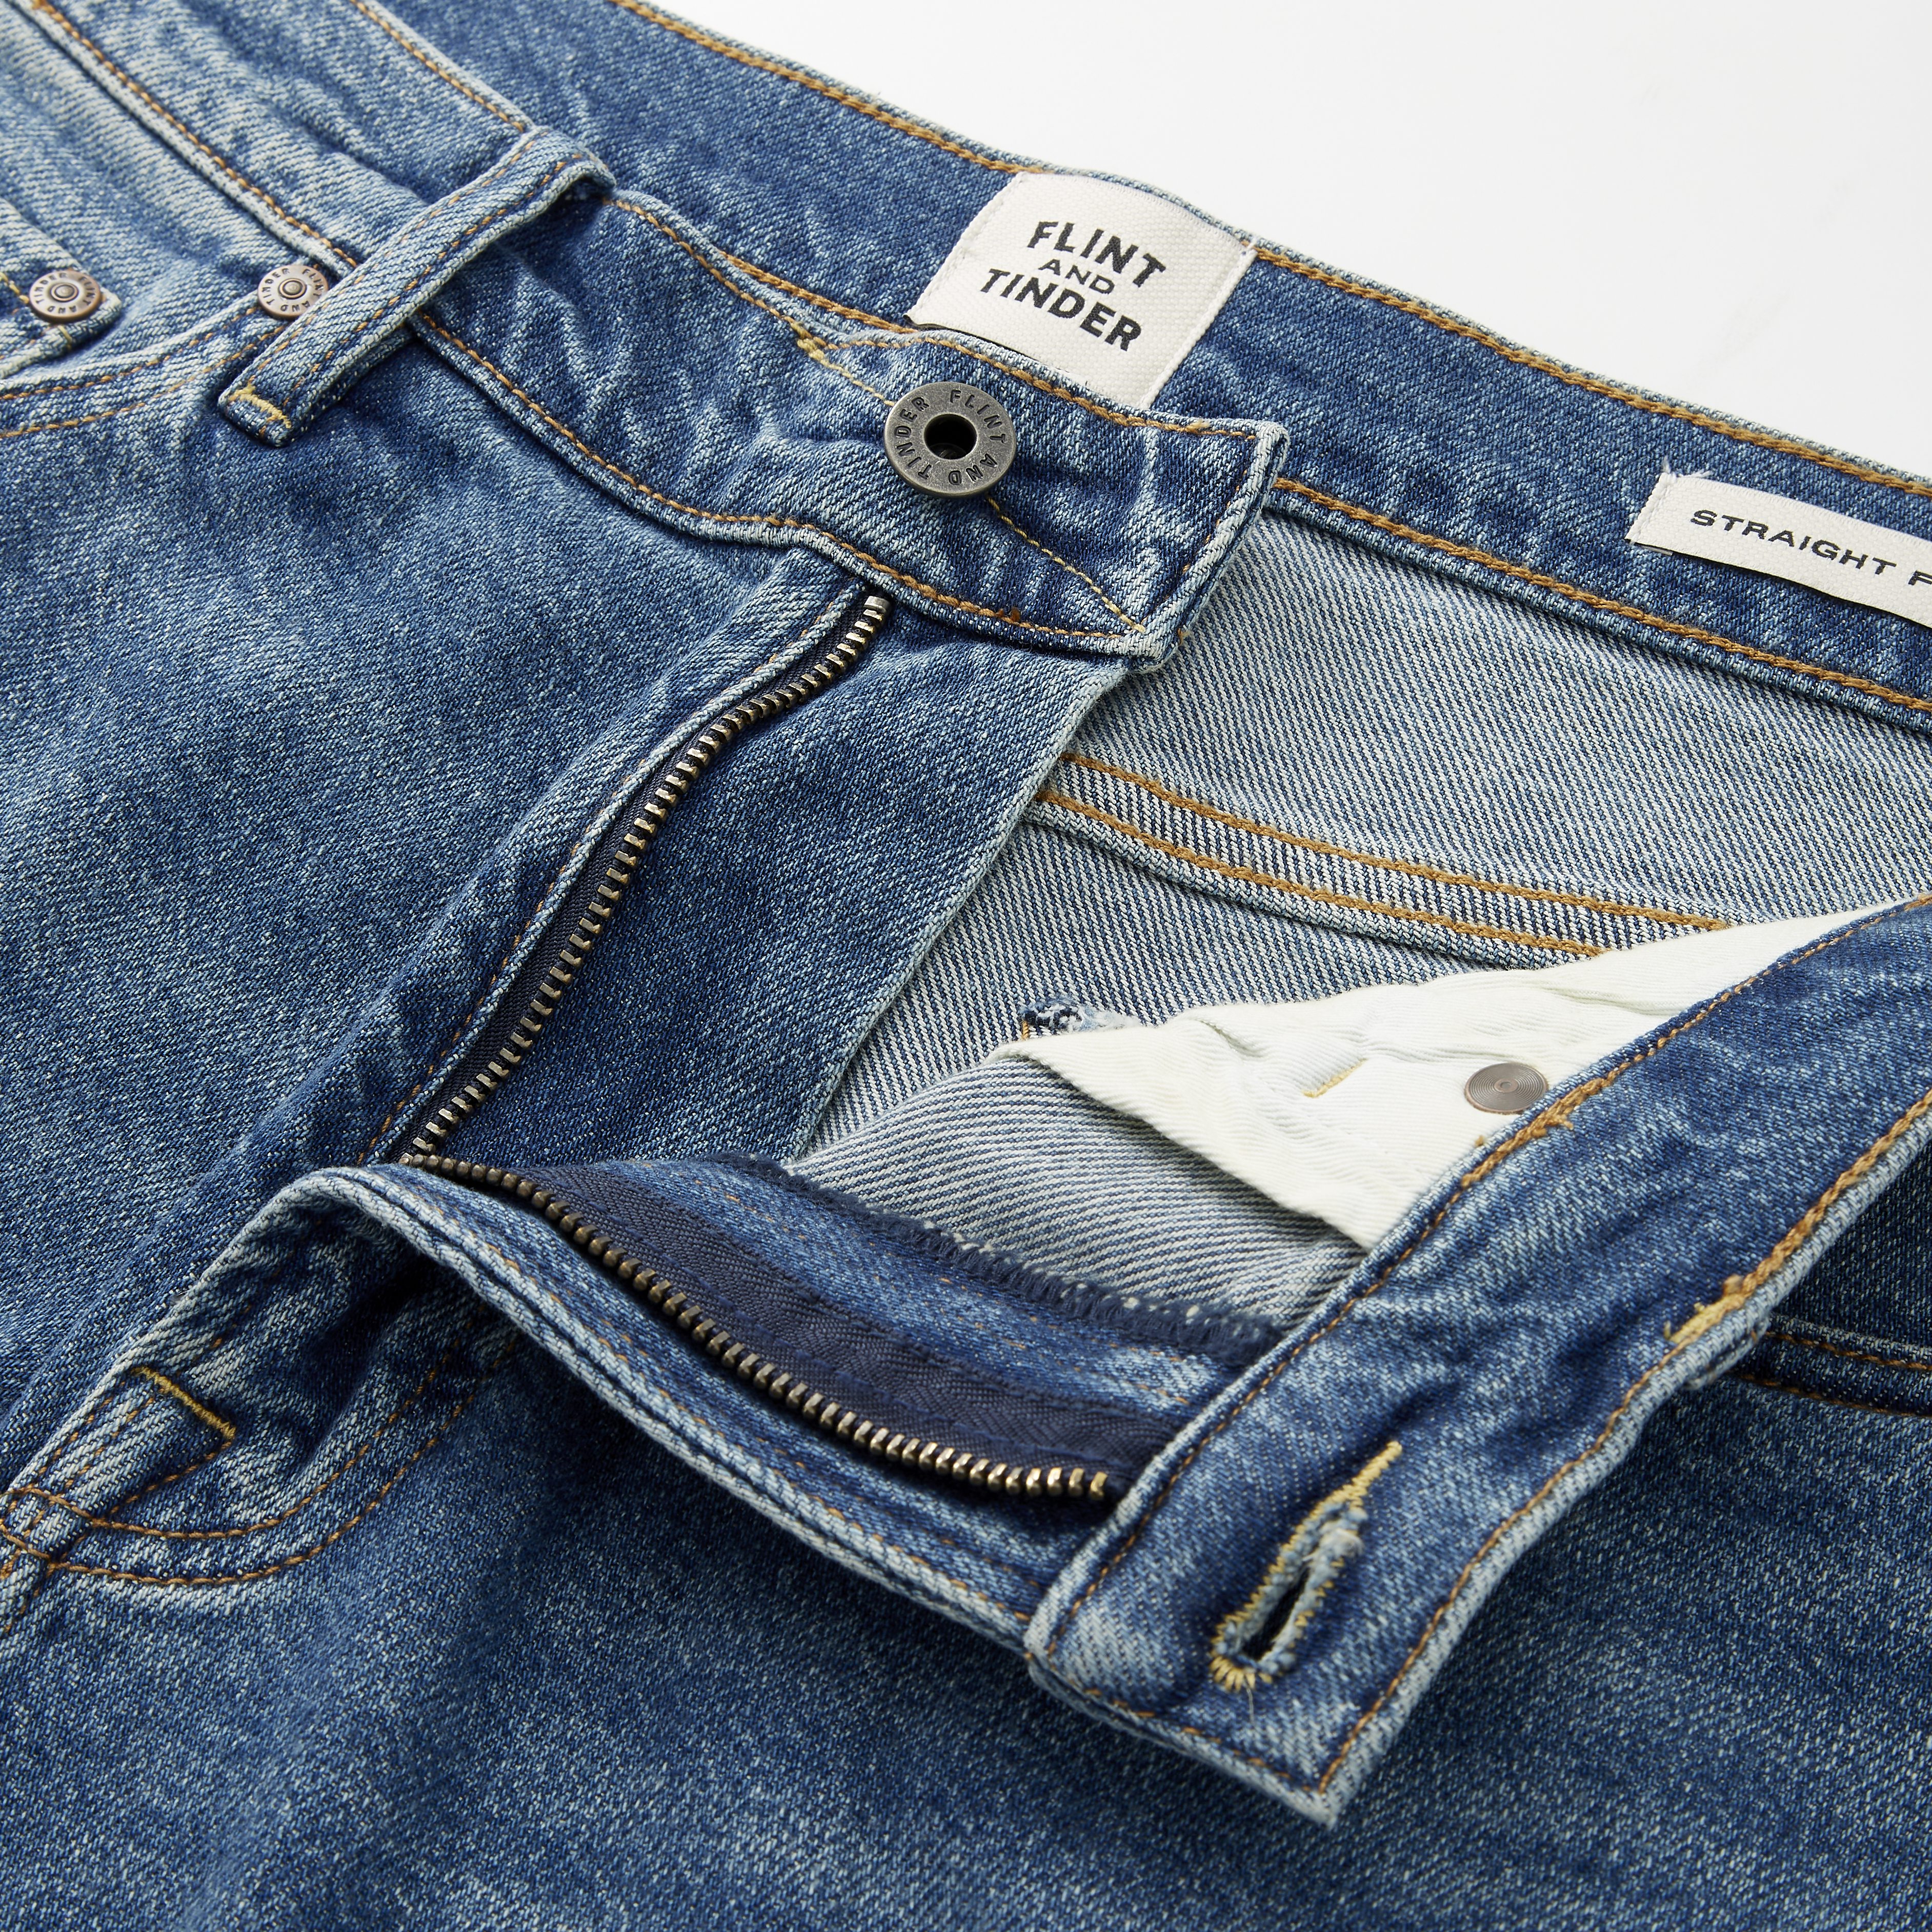 Best lightweight jeans for men this summer. 